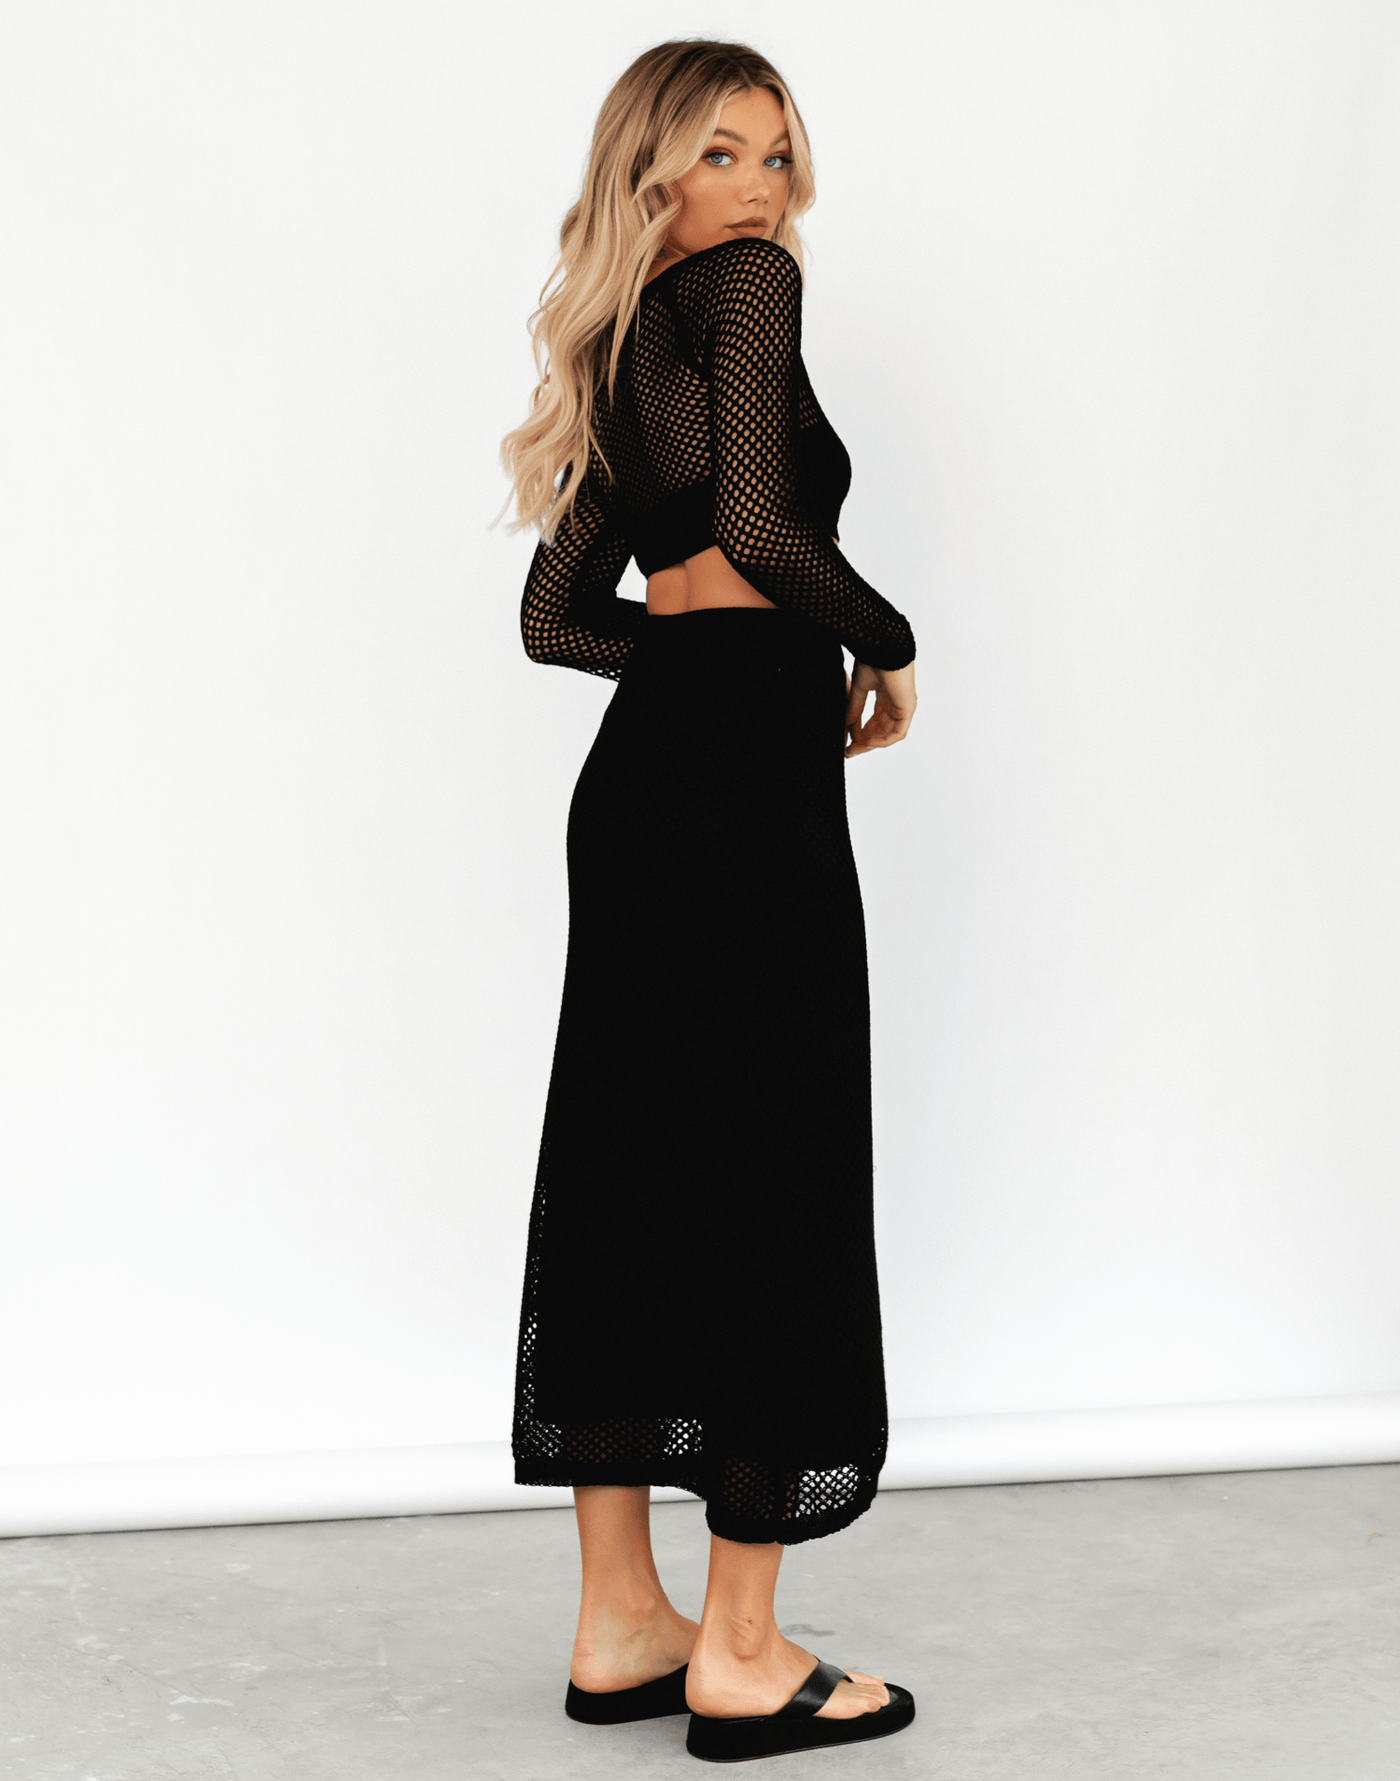 Cyprus Maxi Skirt (Black) - Black Crochet Maxi Skirt - Women's Skirt - Charcoal Clothing